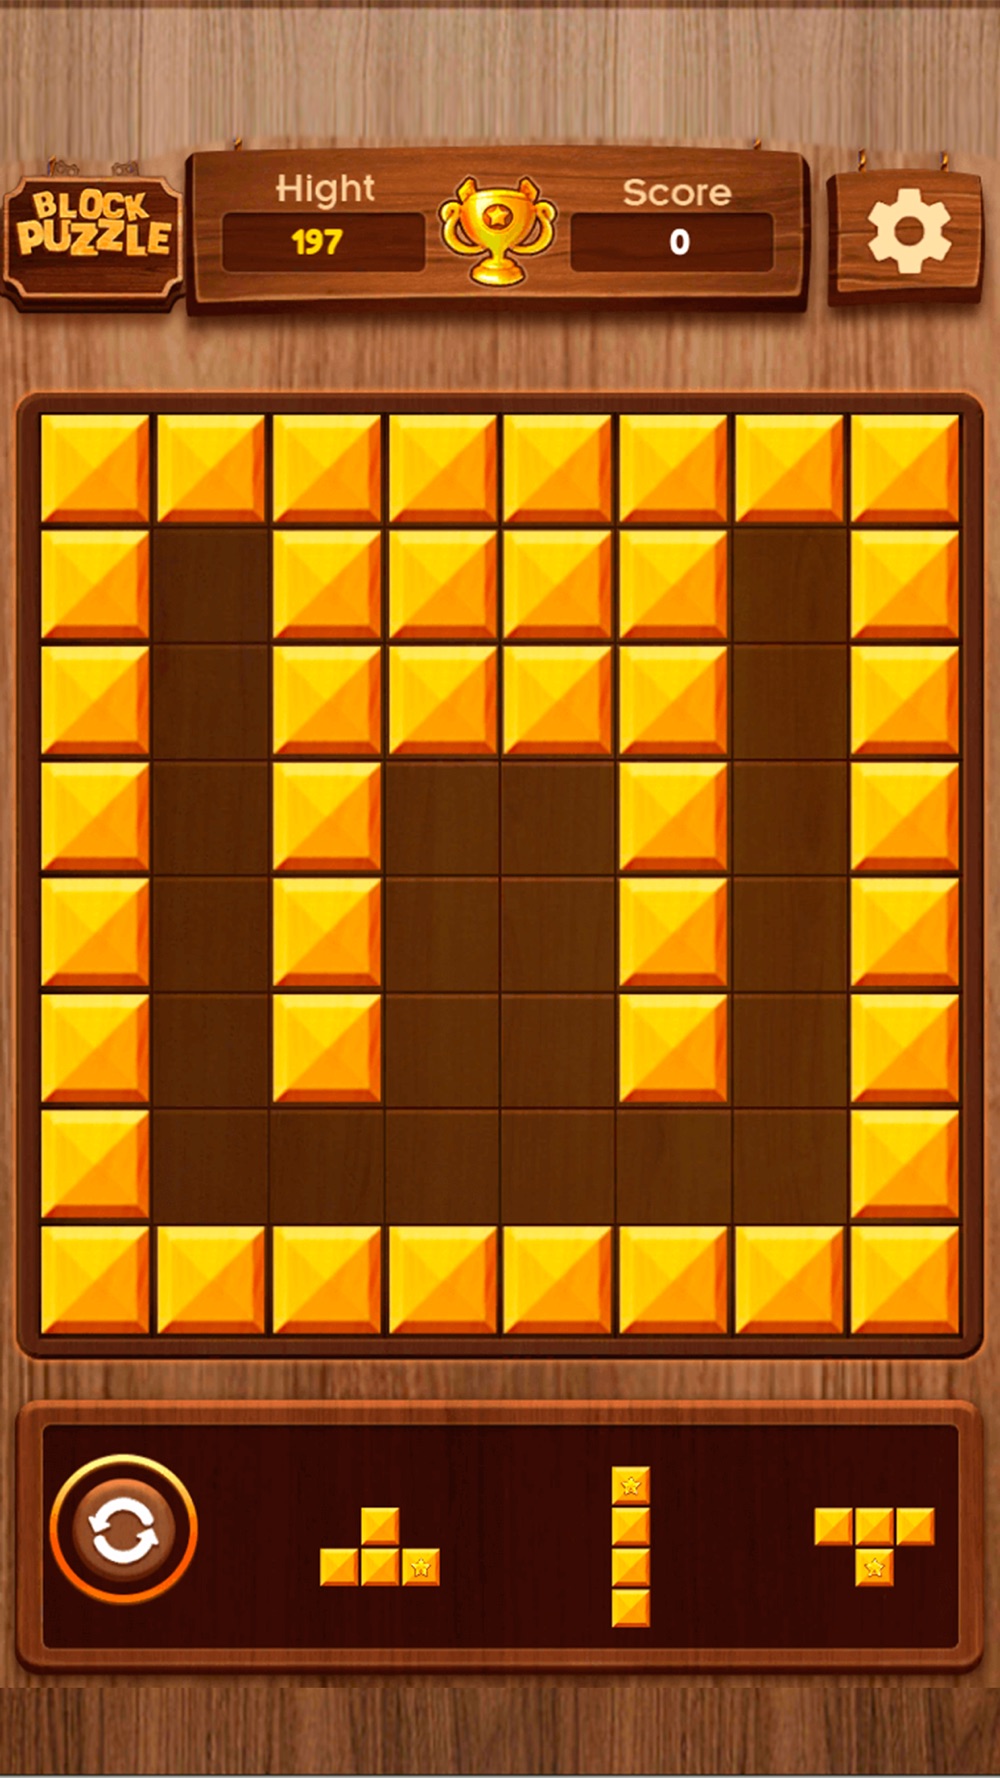 Block Puzzle 2020 Free Download App for iPhone - STEPrimo.com